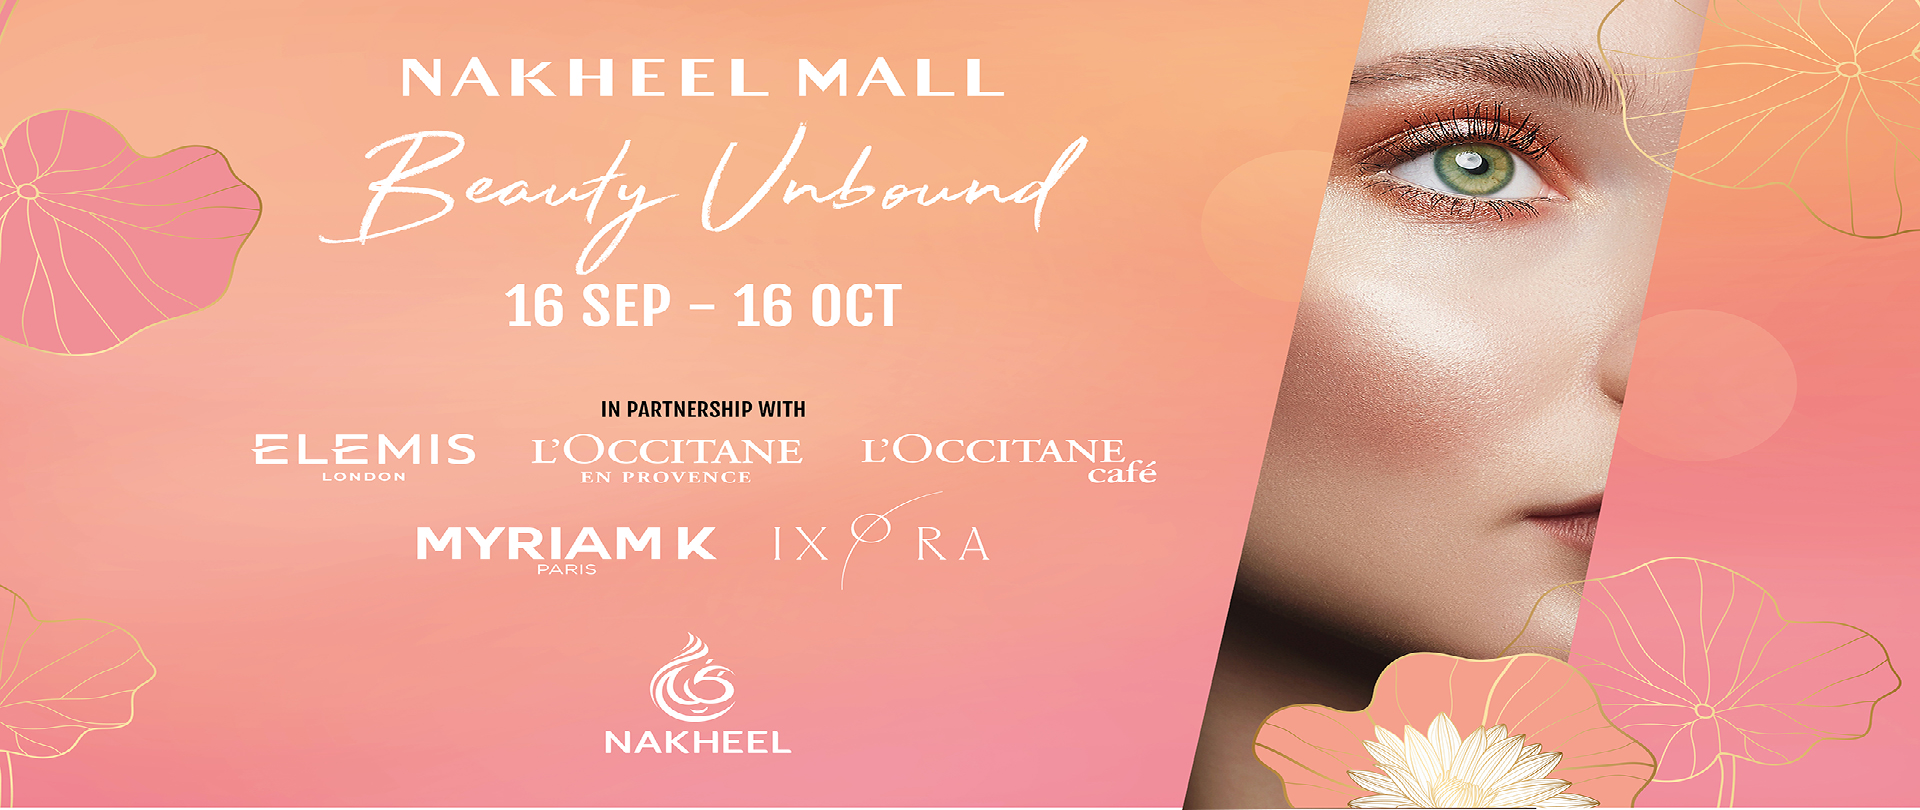 BEAUTY UNBOUND by Nakheel Mall 